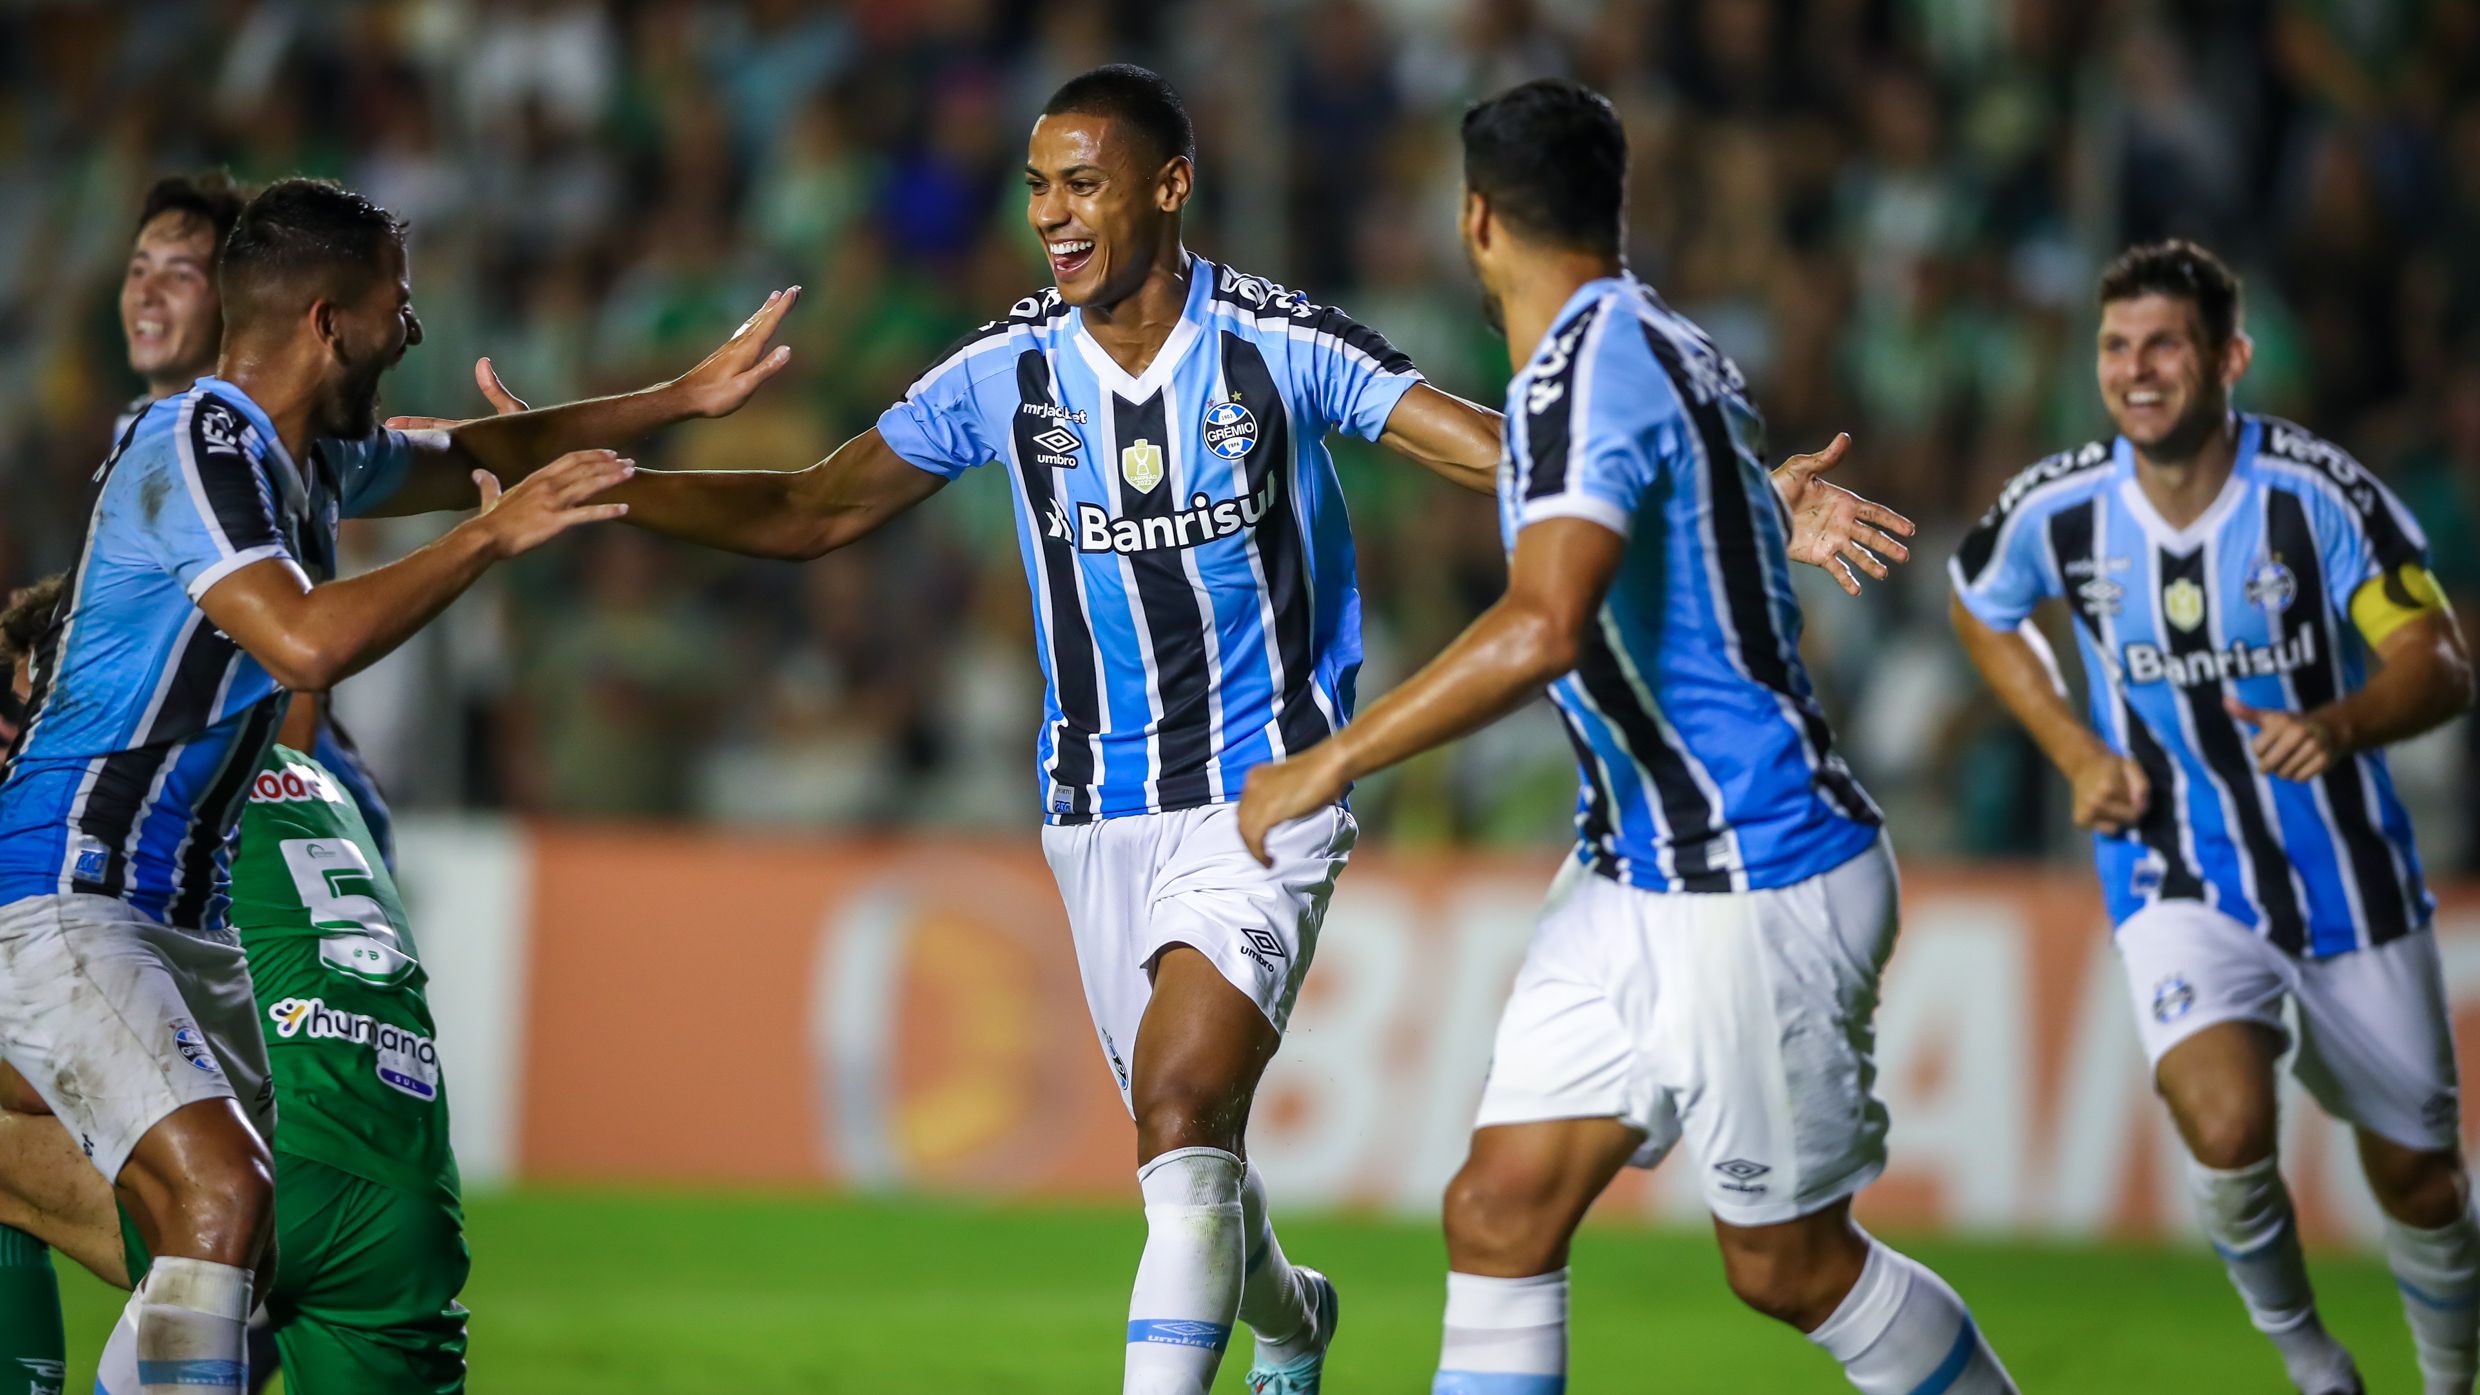 Grêmio vs. Ituano: A Clash of Styles and Tactics